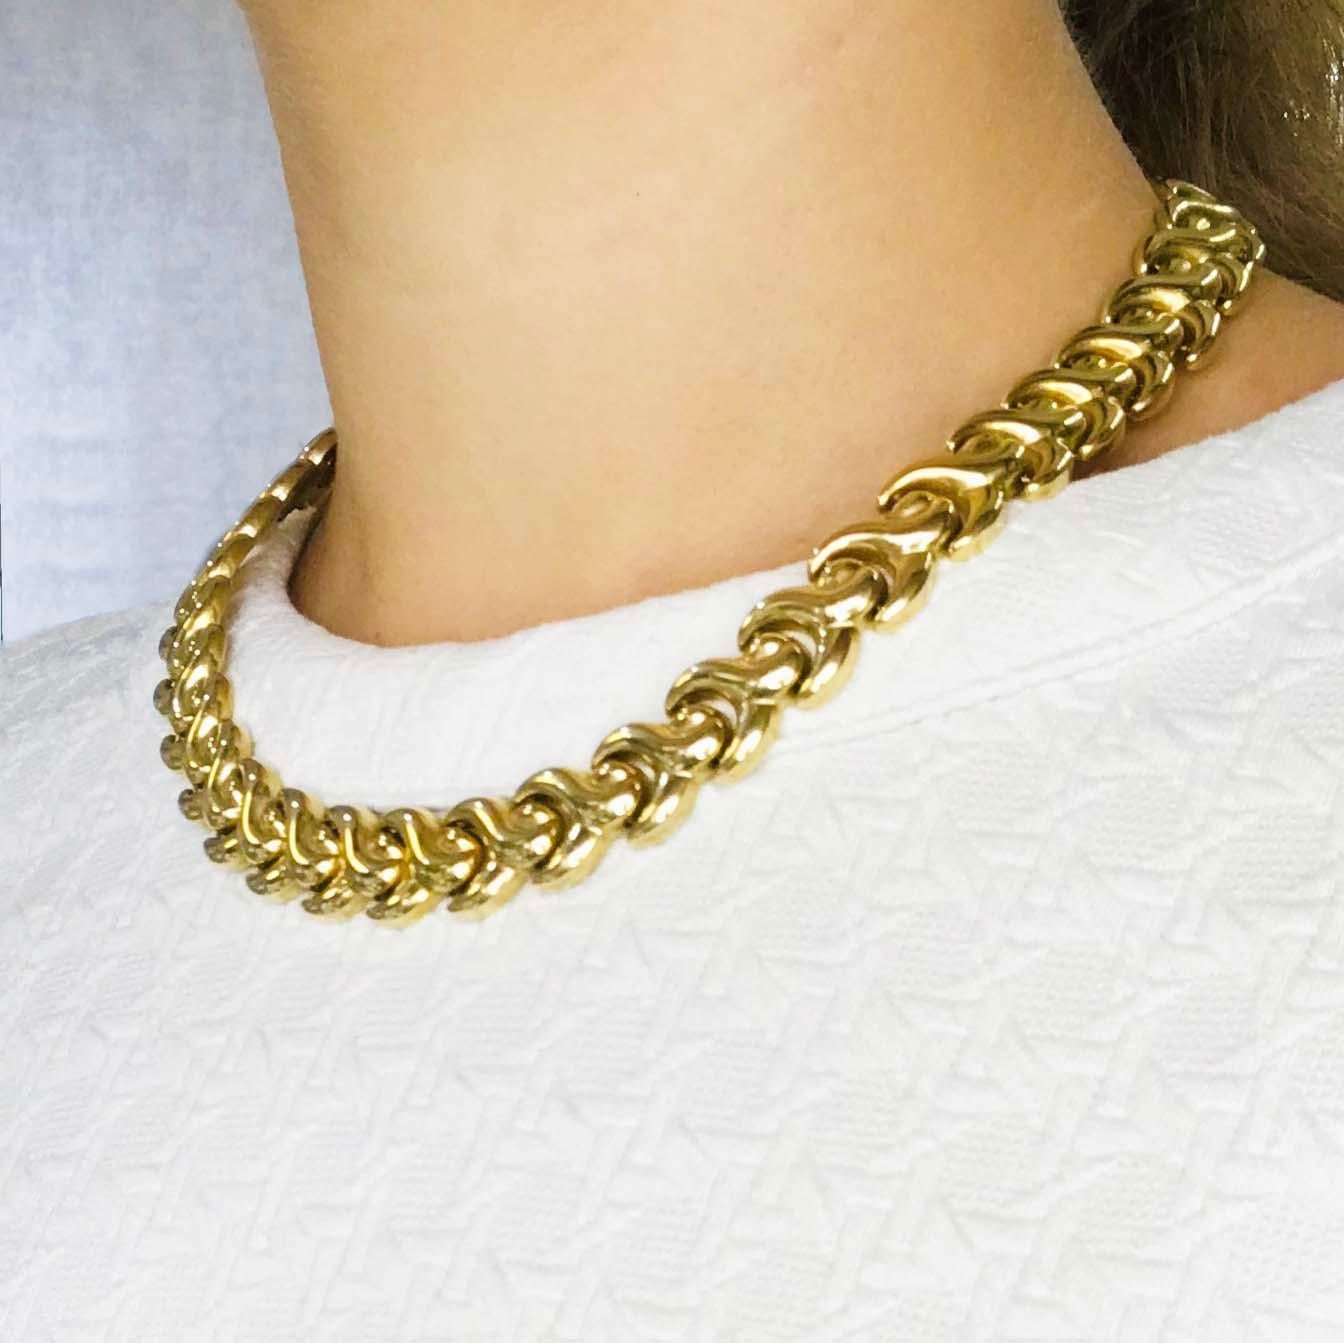 Artisan Custom Link Choker Necklace in 14 Karat Yellow Gold, Italian Made Chain Necklace